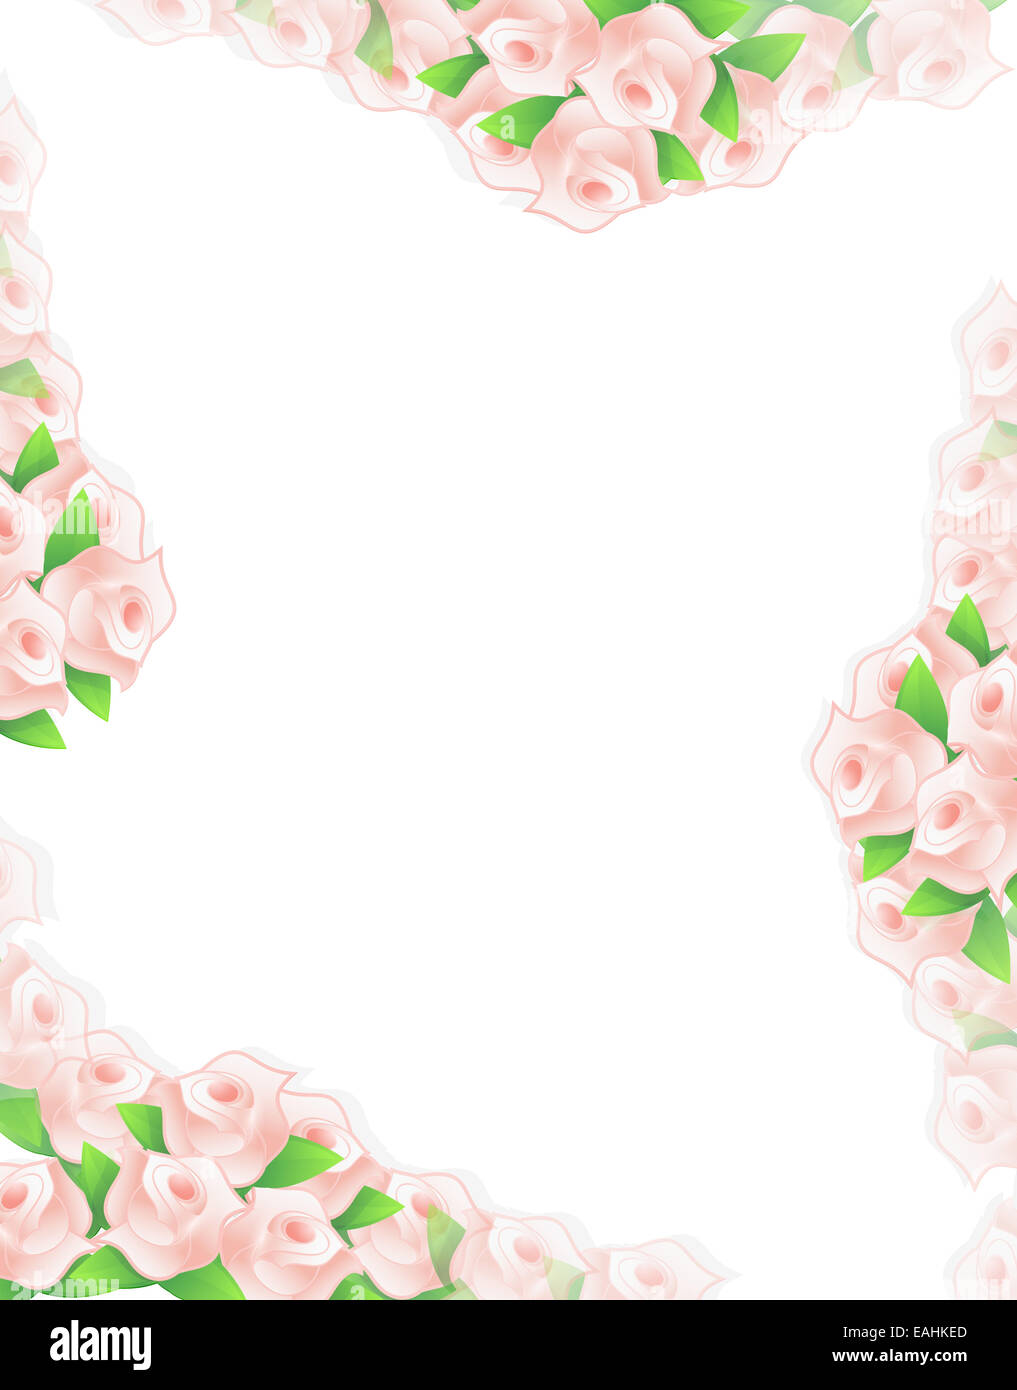 Soft color flowers illustration designs Stock Photo